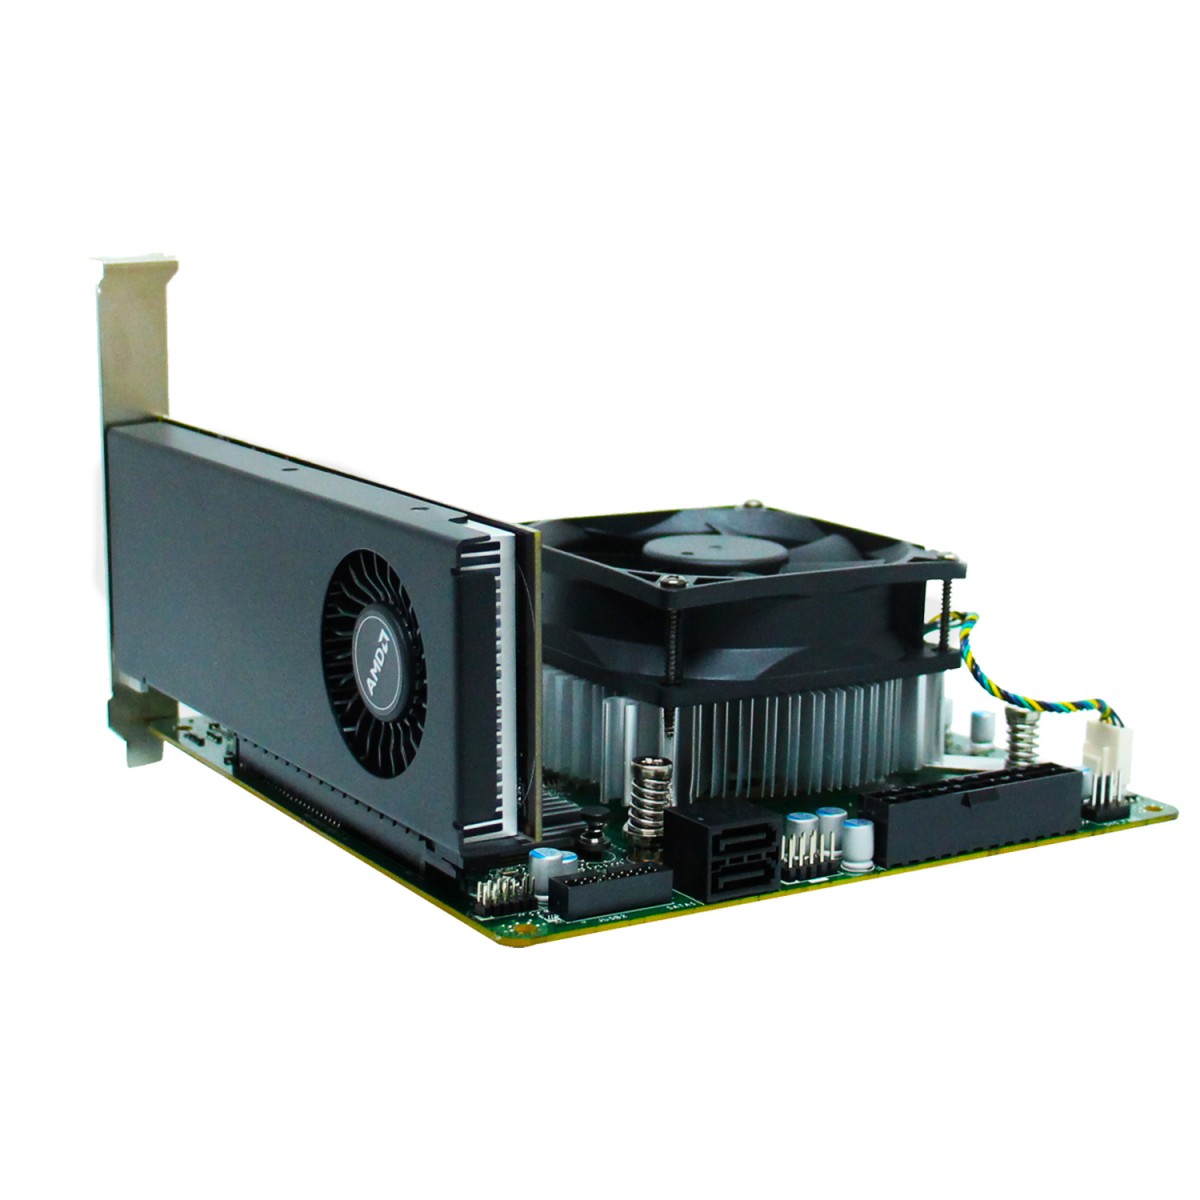 Kit Upgrade AMD Cardinal Zen 2, Processador AMD 4700S 3.6Ghz (Turbo 4.0Ghz), Placa de vídeo RX 550 2GB, Memória RAM 16GB